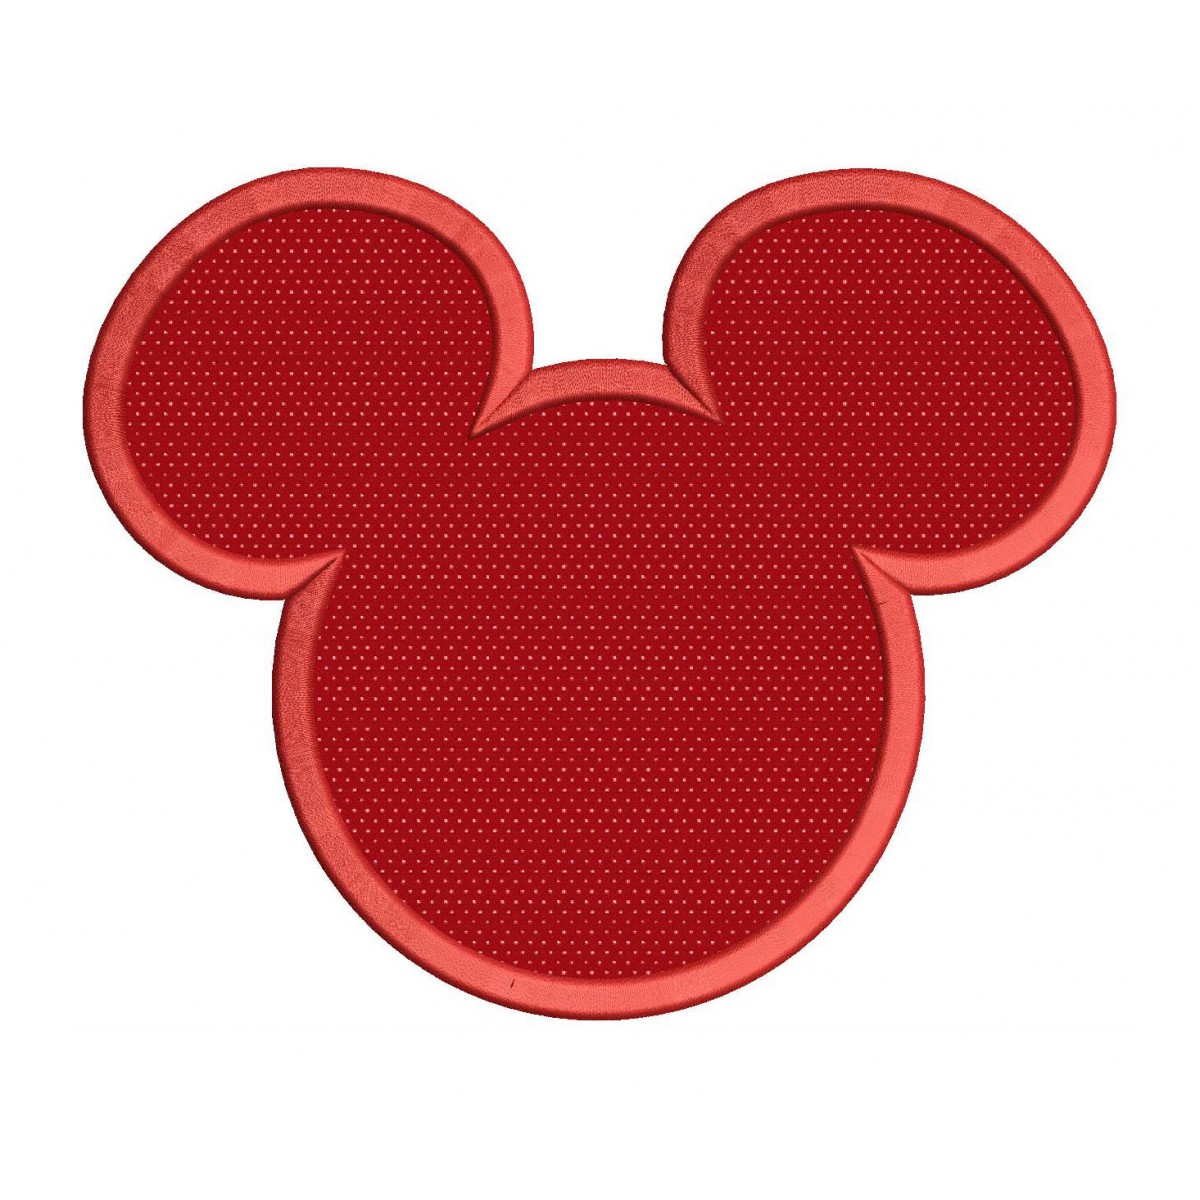 Mickey Mouse Applique Machine Embroidery Design 02